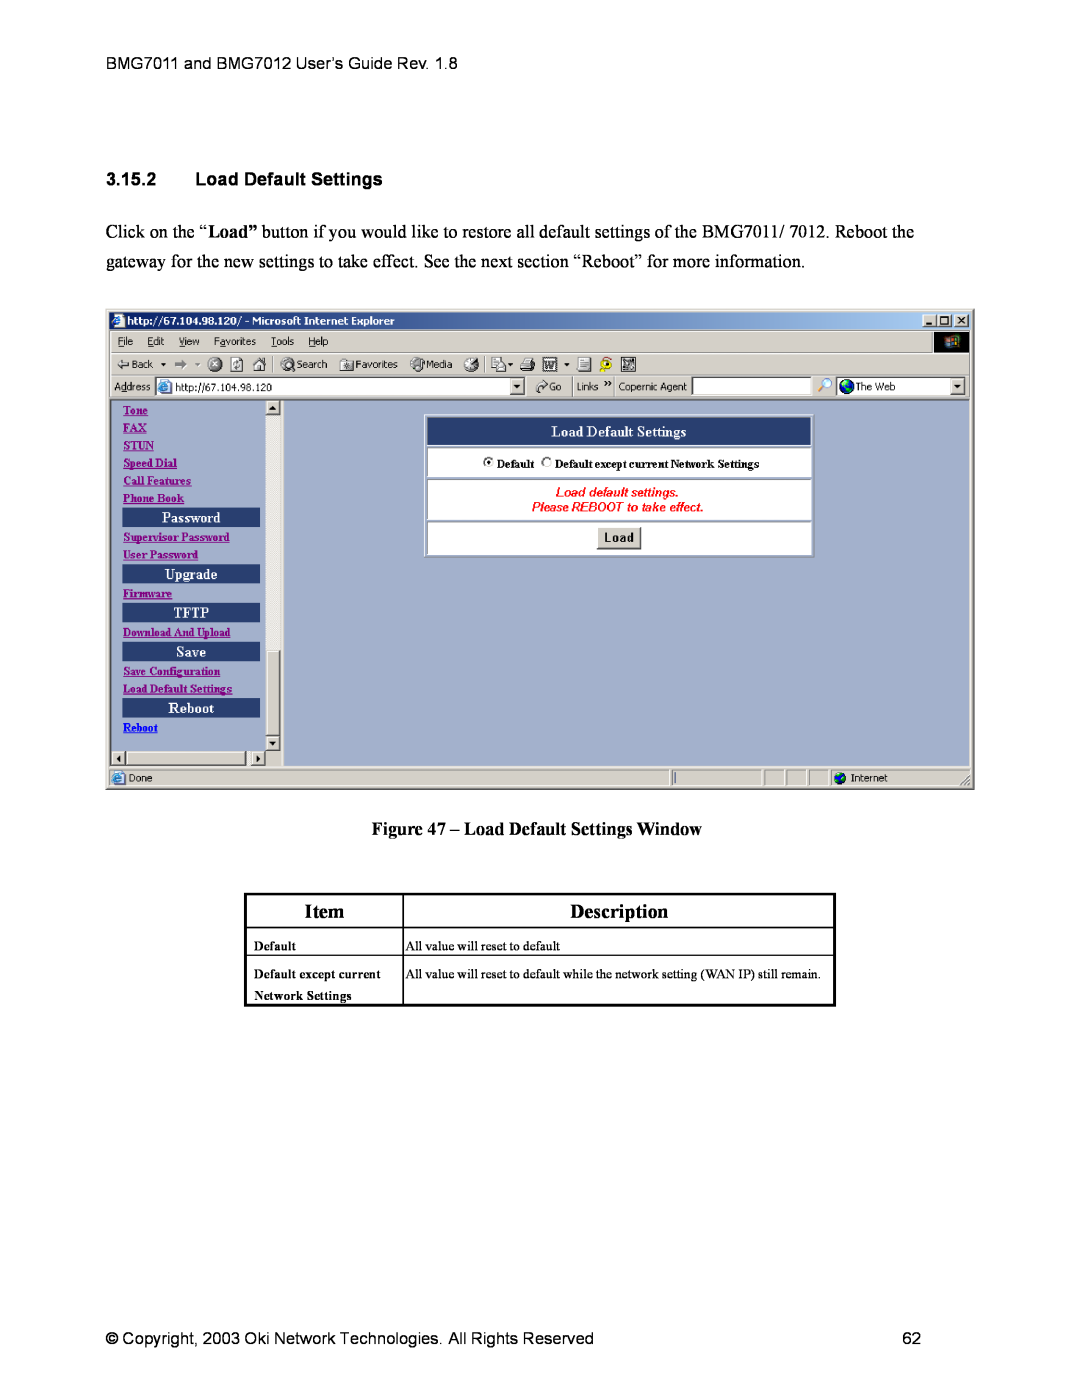 Oki BMG7012, BMG7011 manual 3.15.2Load Default Settings, Load Default Settings Window, Description 